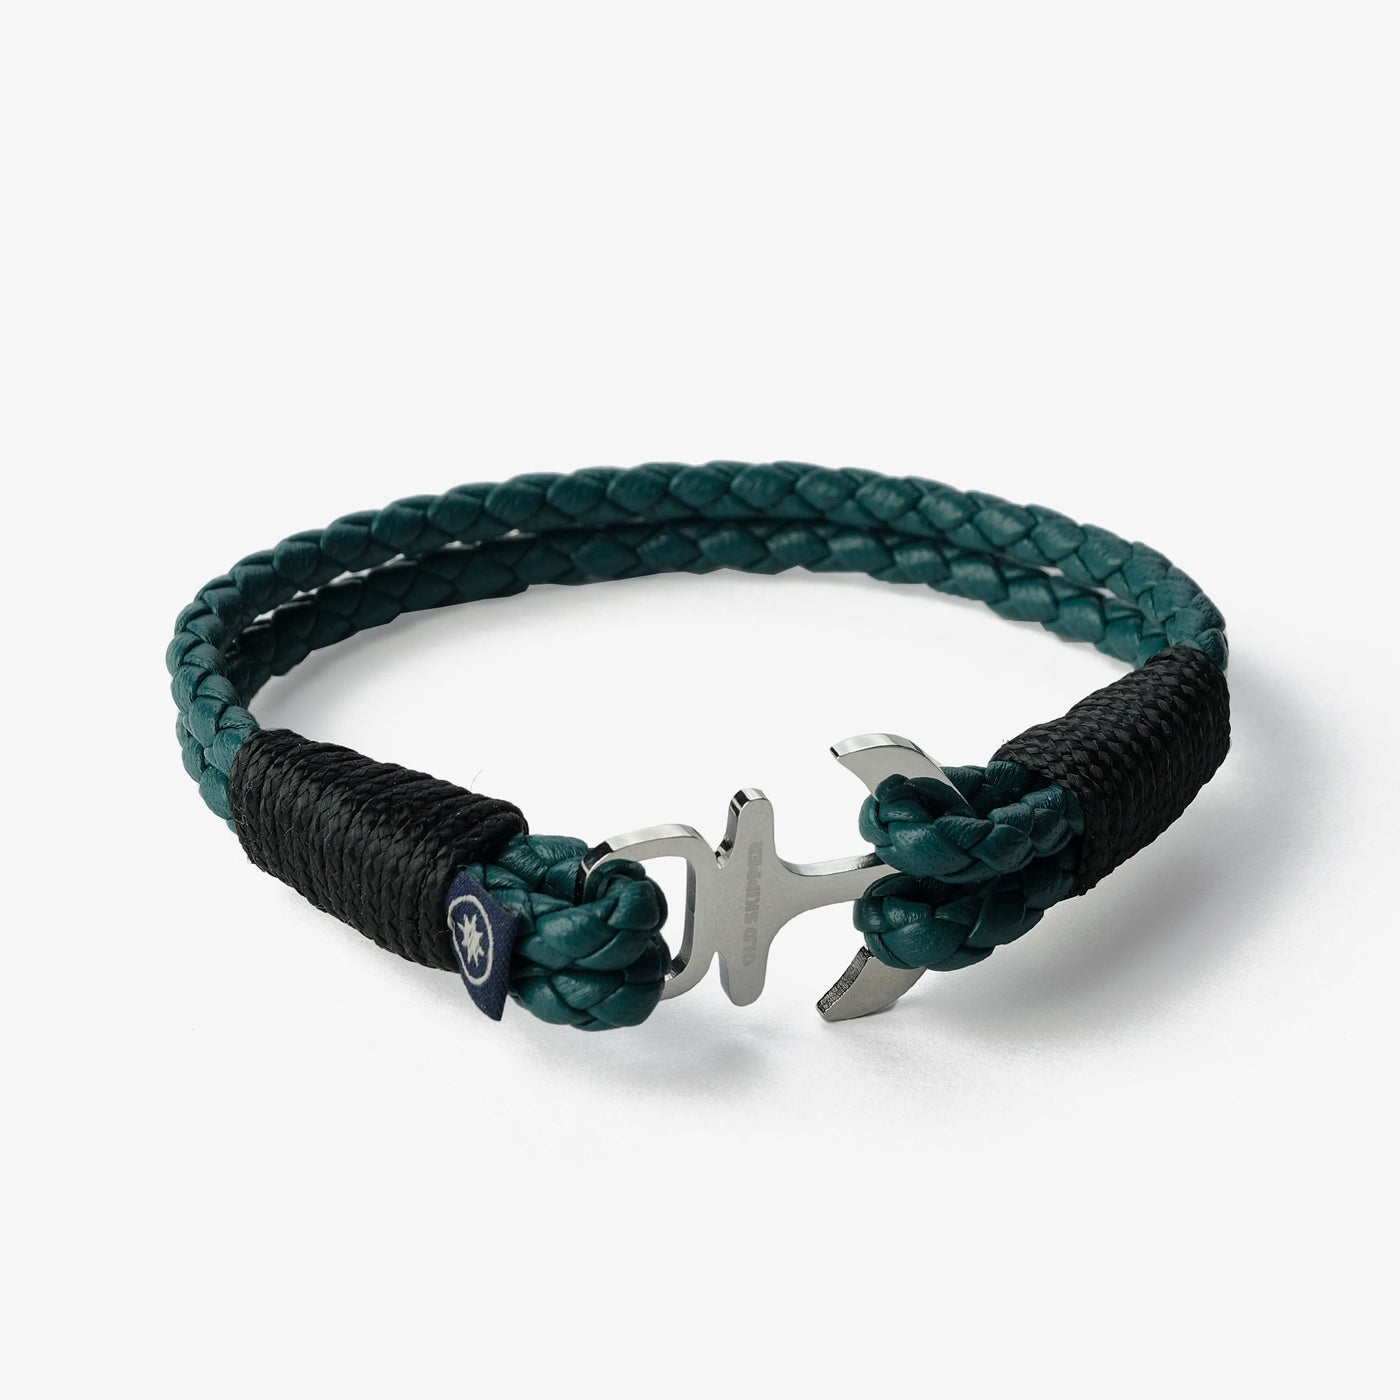 Enchanted Bay Braided Nappa Leather Bracelet